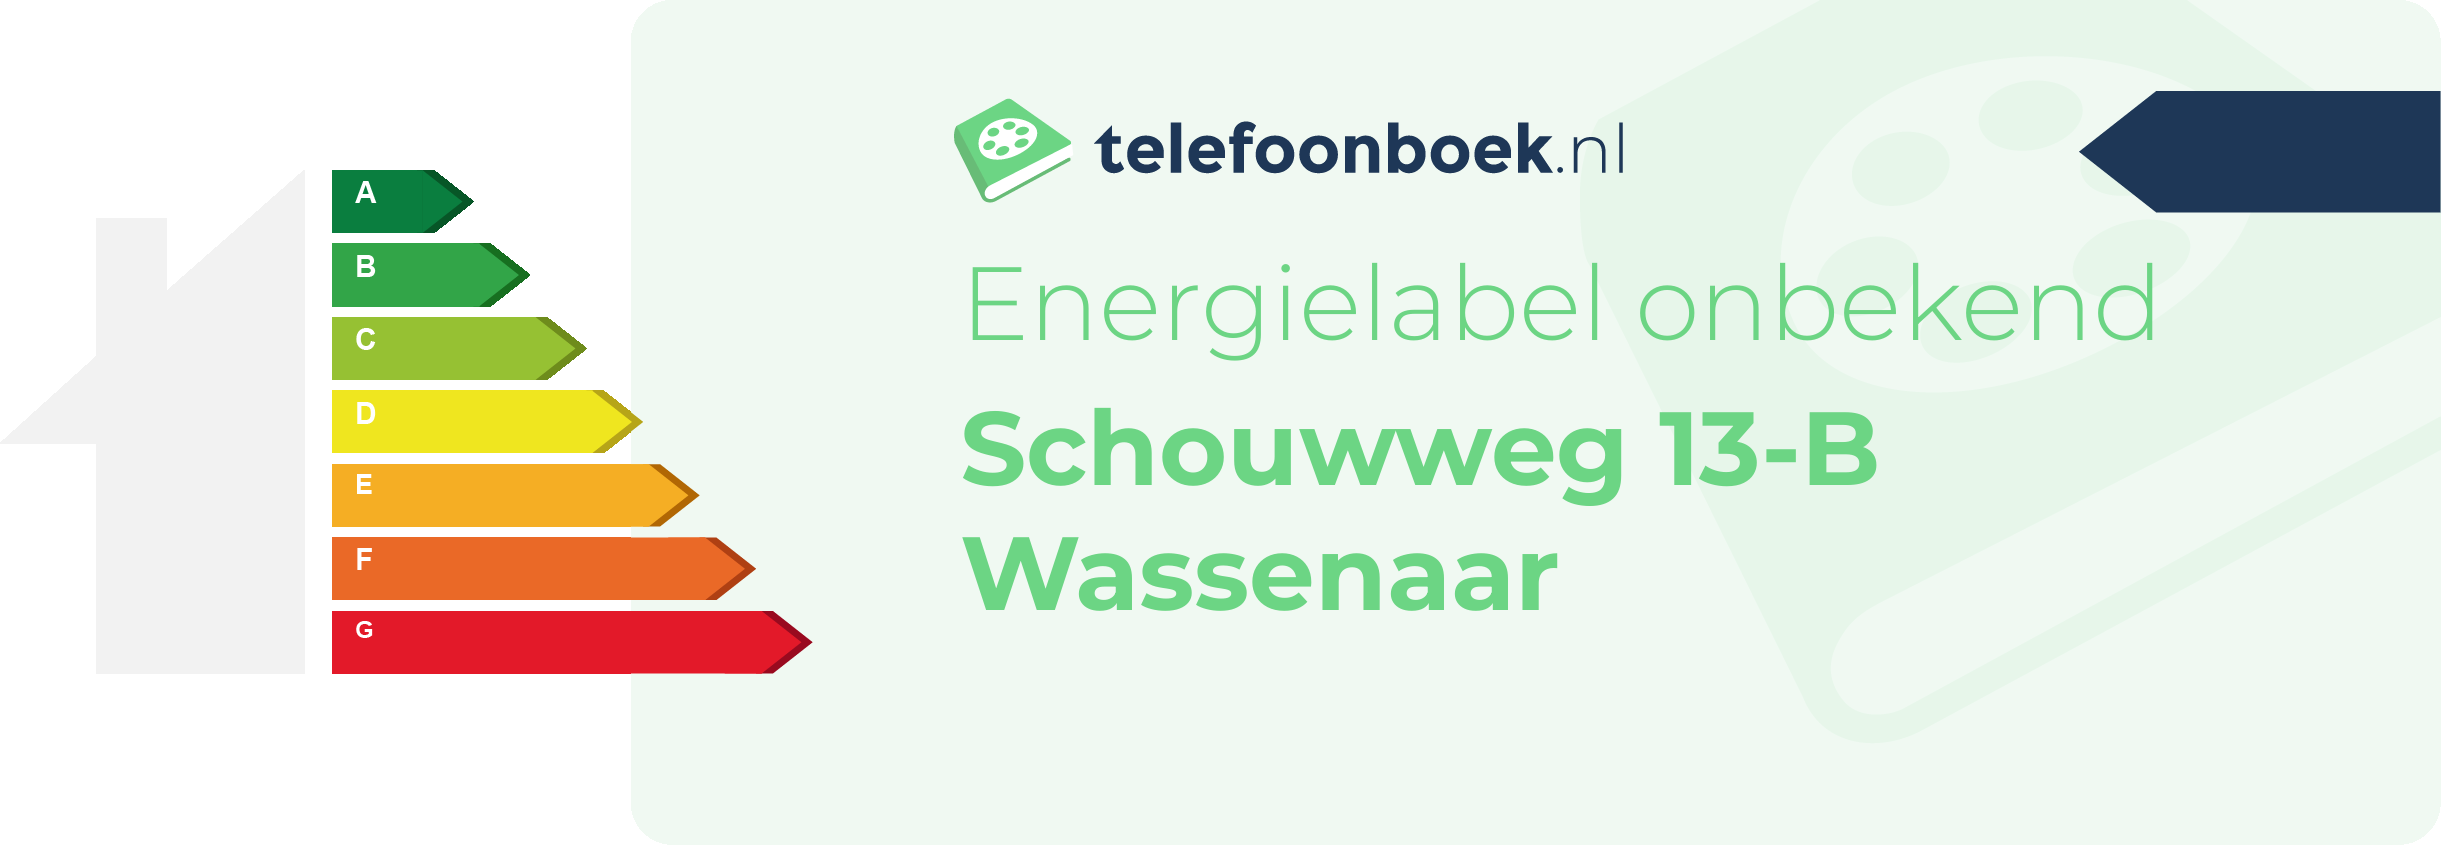 Energielabel Schouwweg 13-B Wassenaar